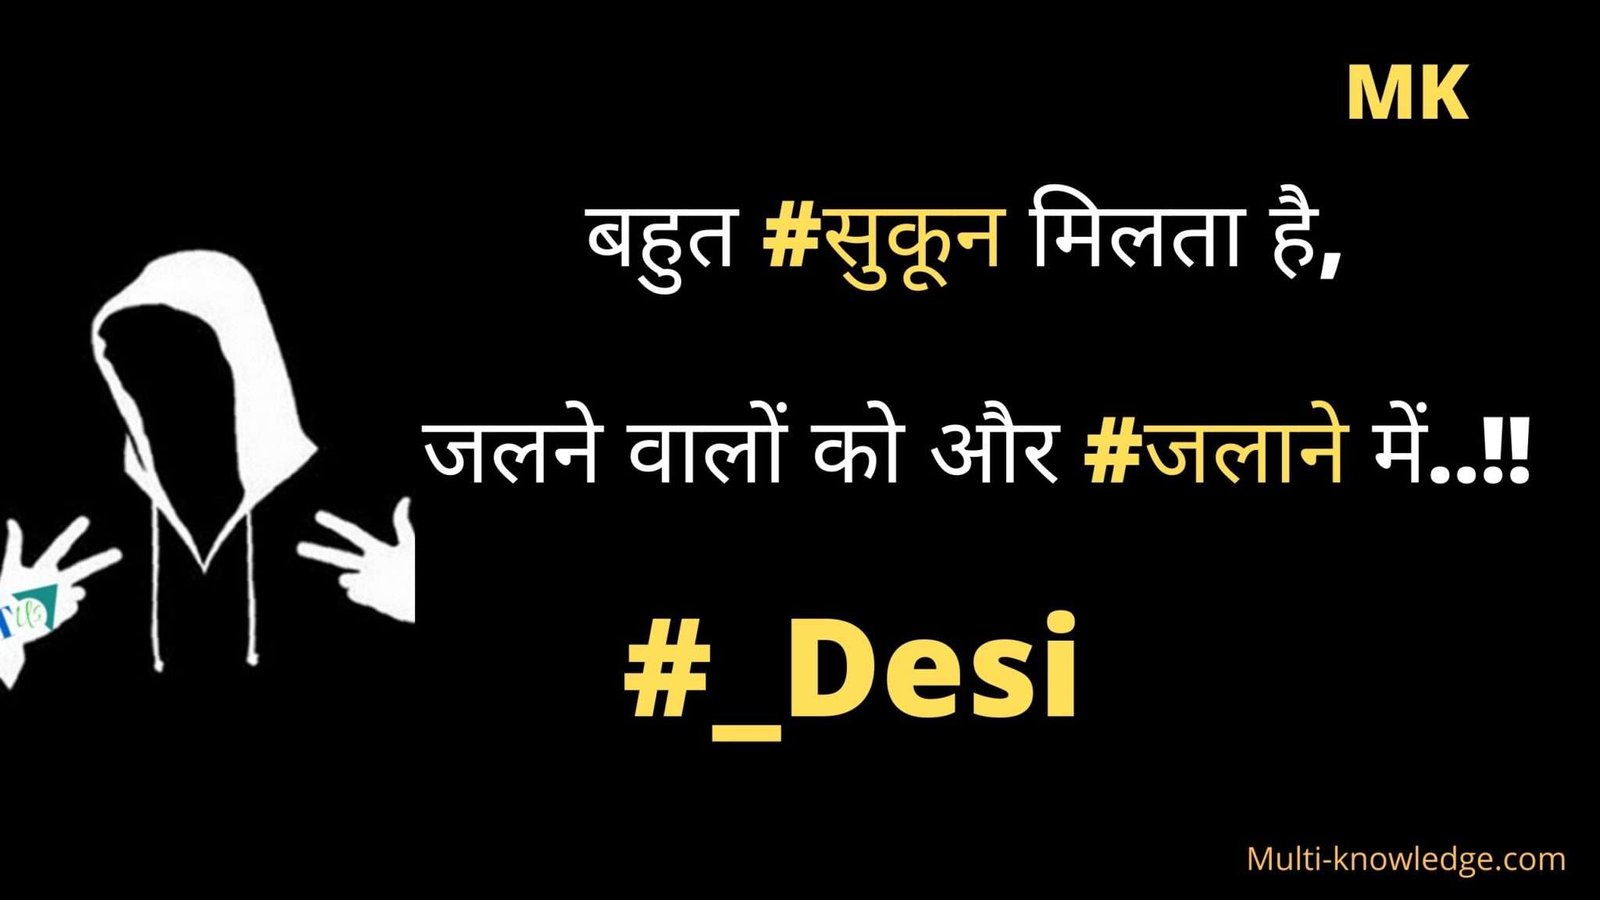 Desi Jatt status in Hindi by multi-knowledge.com